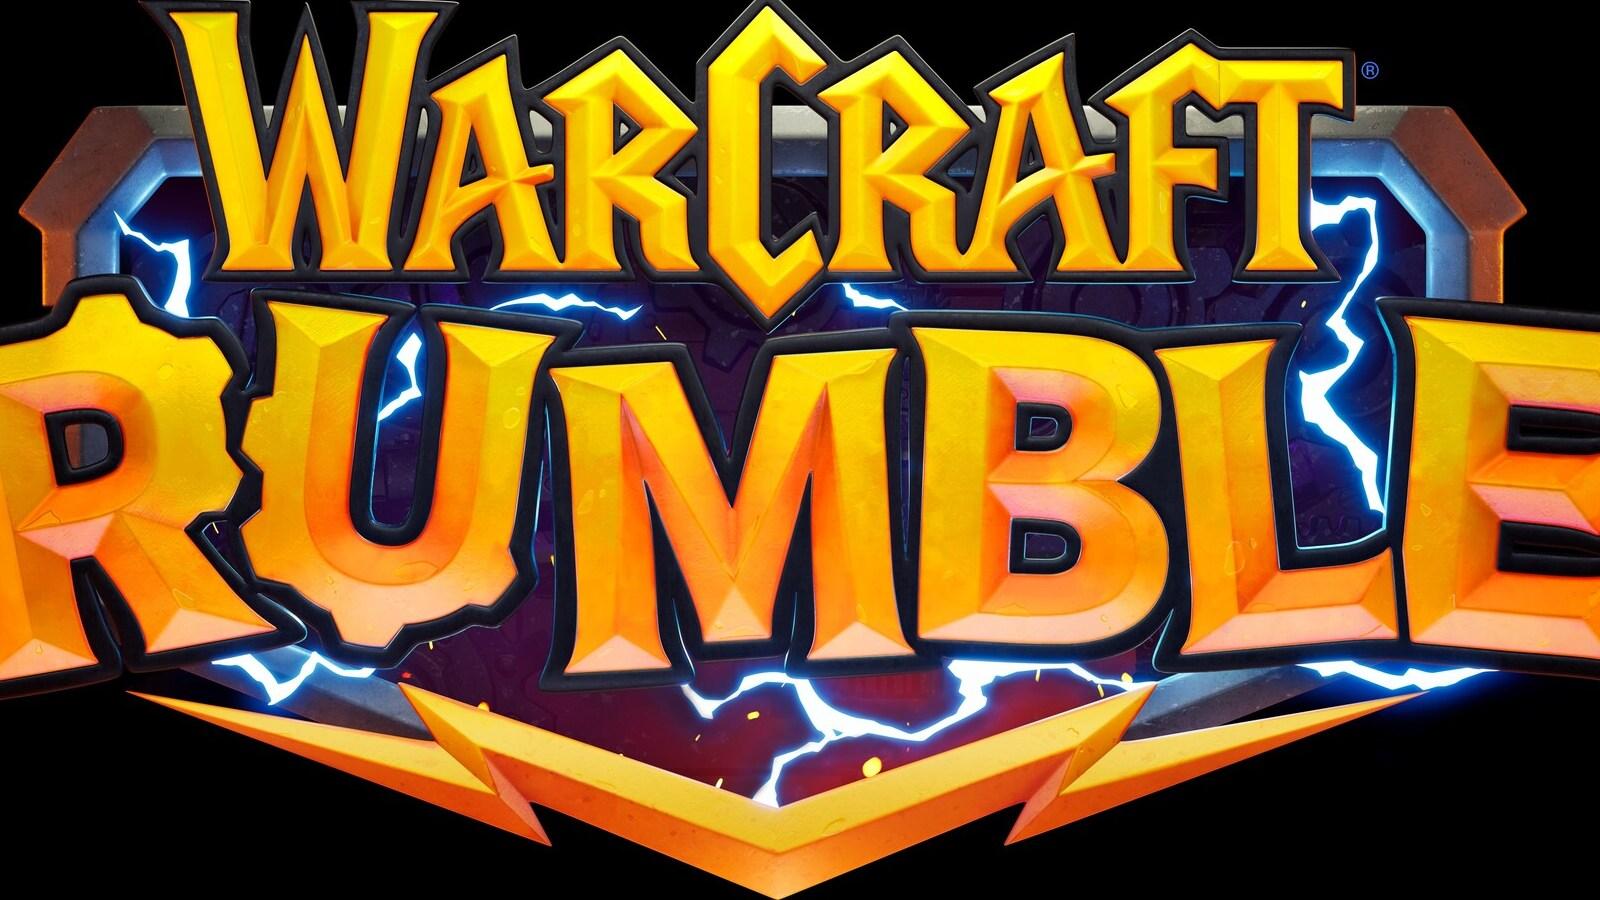 The Warcraft Rumble logo